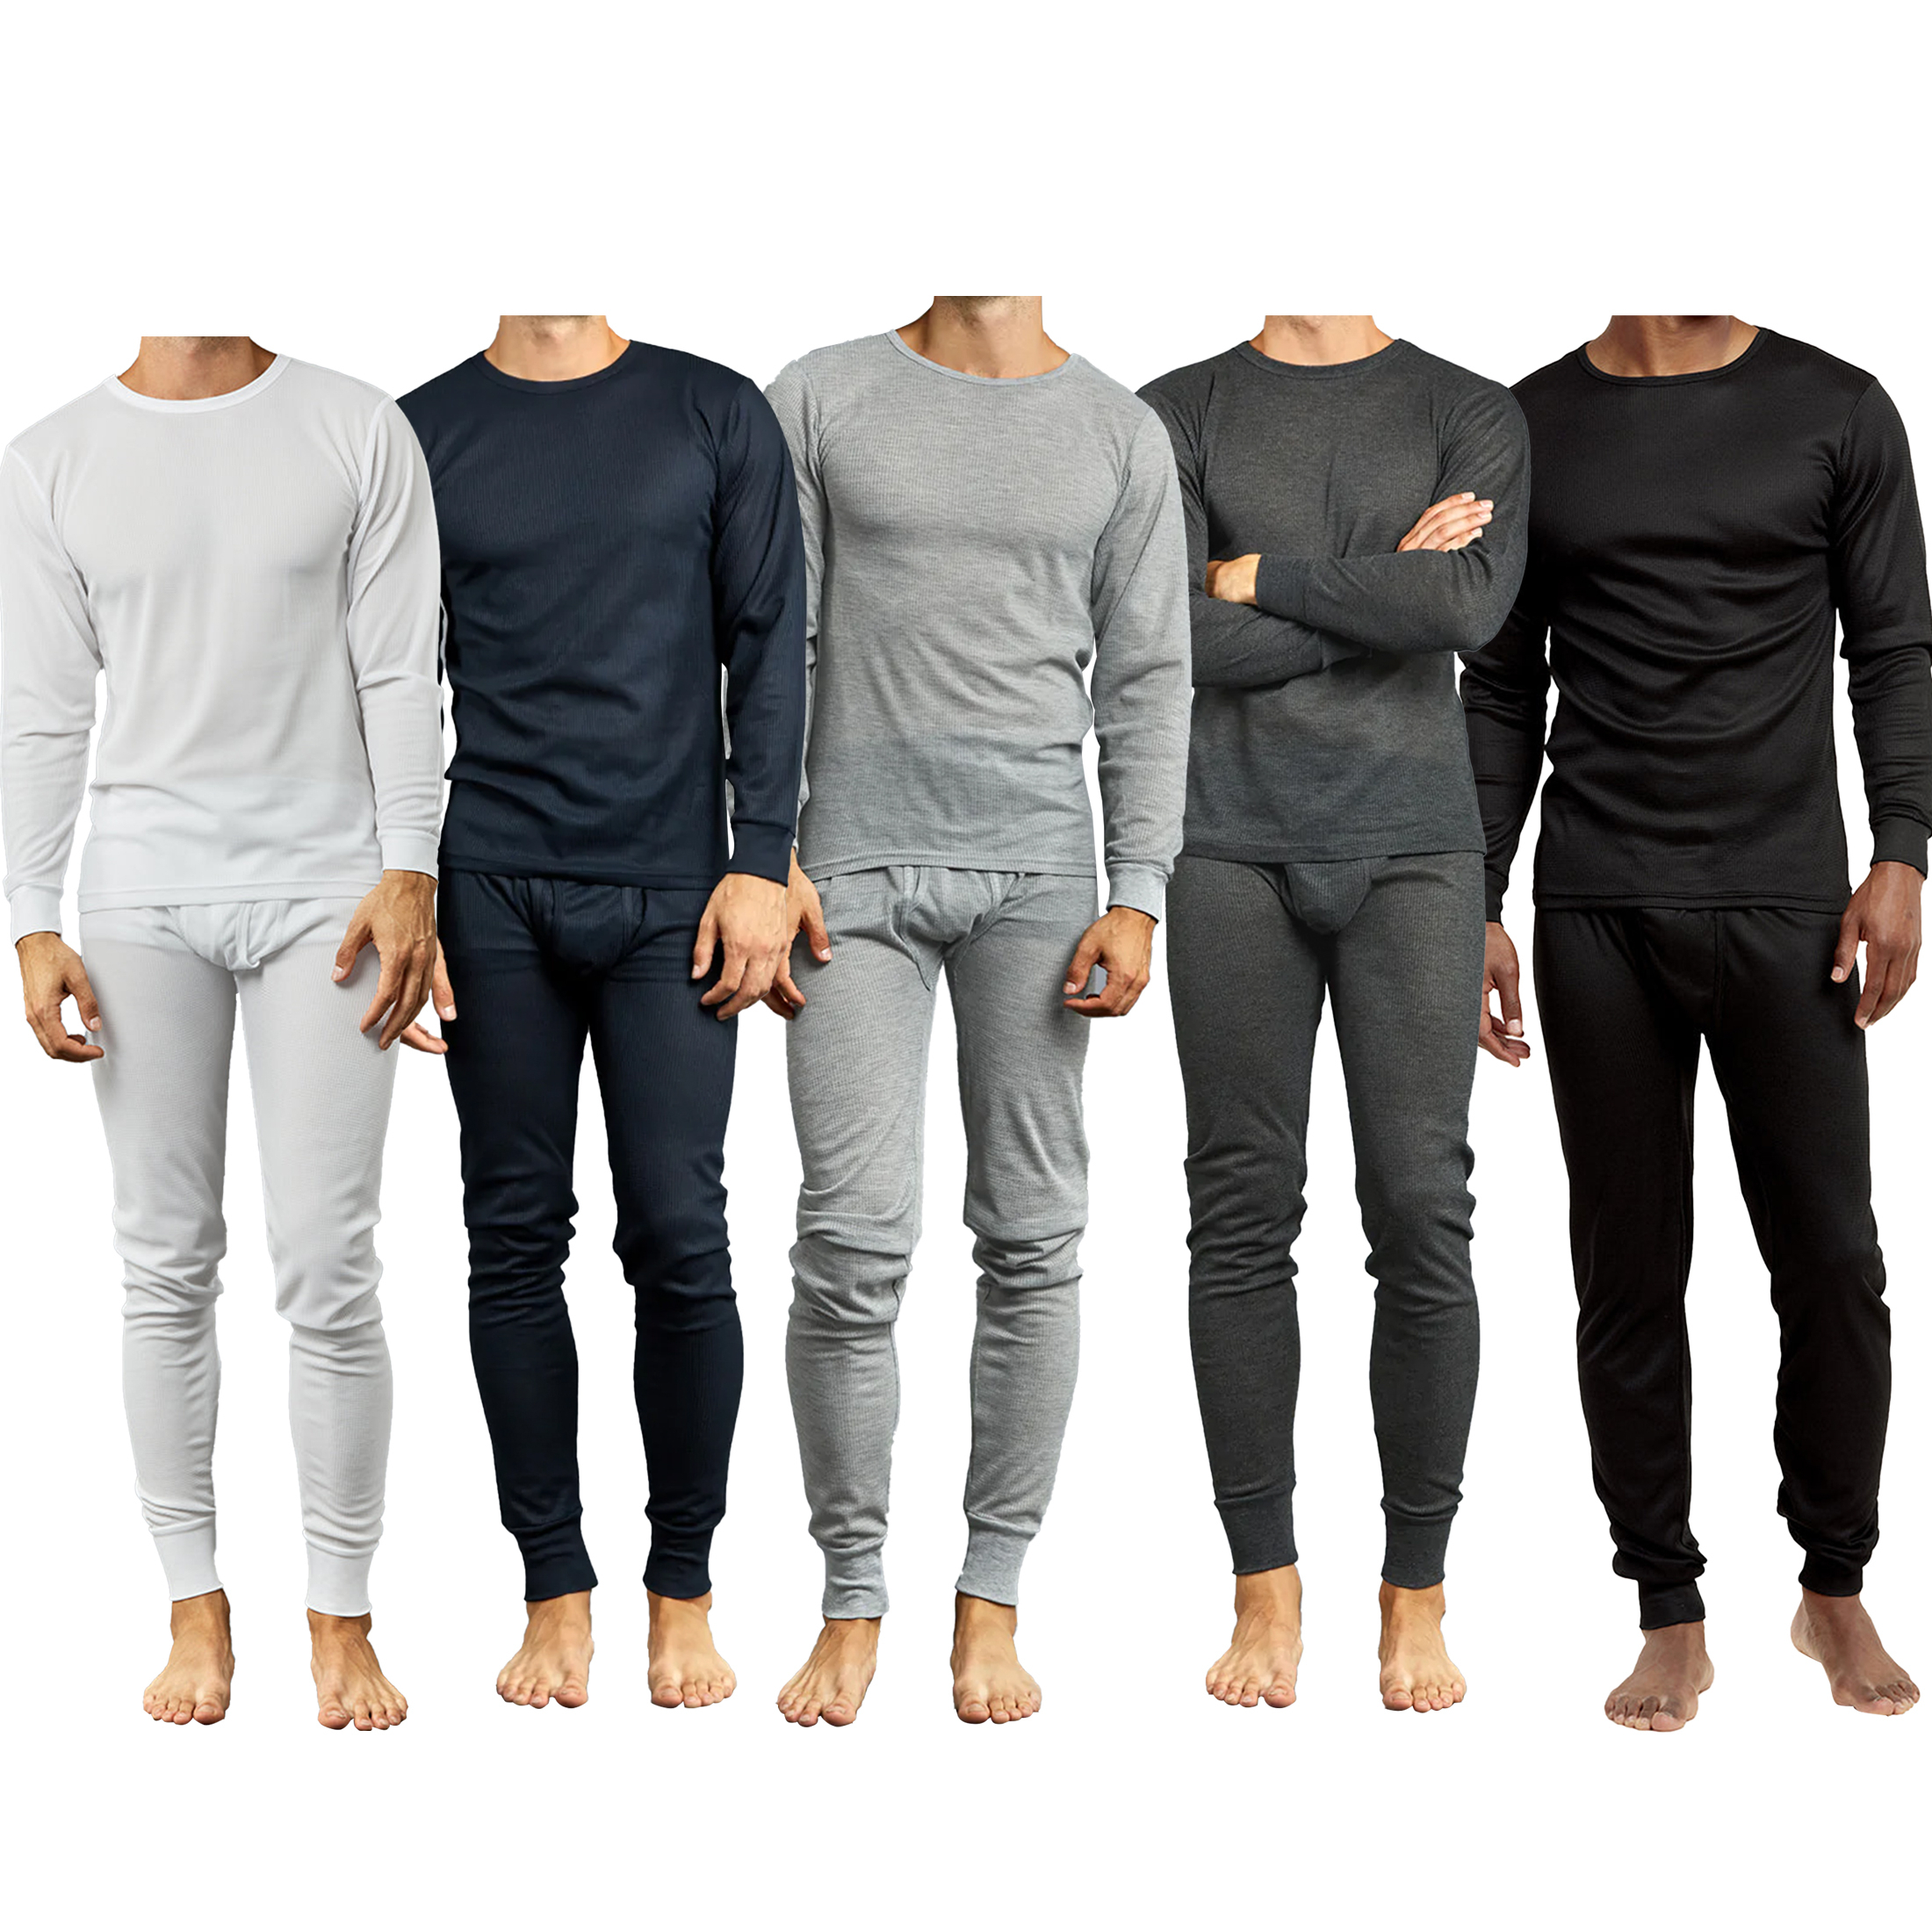 2-Piece: Men's Moisture Wicking Long Johns Base Layer Thermal Underwear Set (Top & Bottom) - Grey, Large